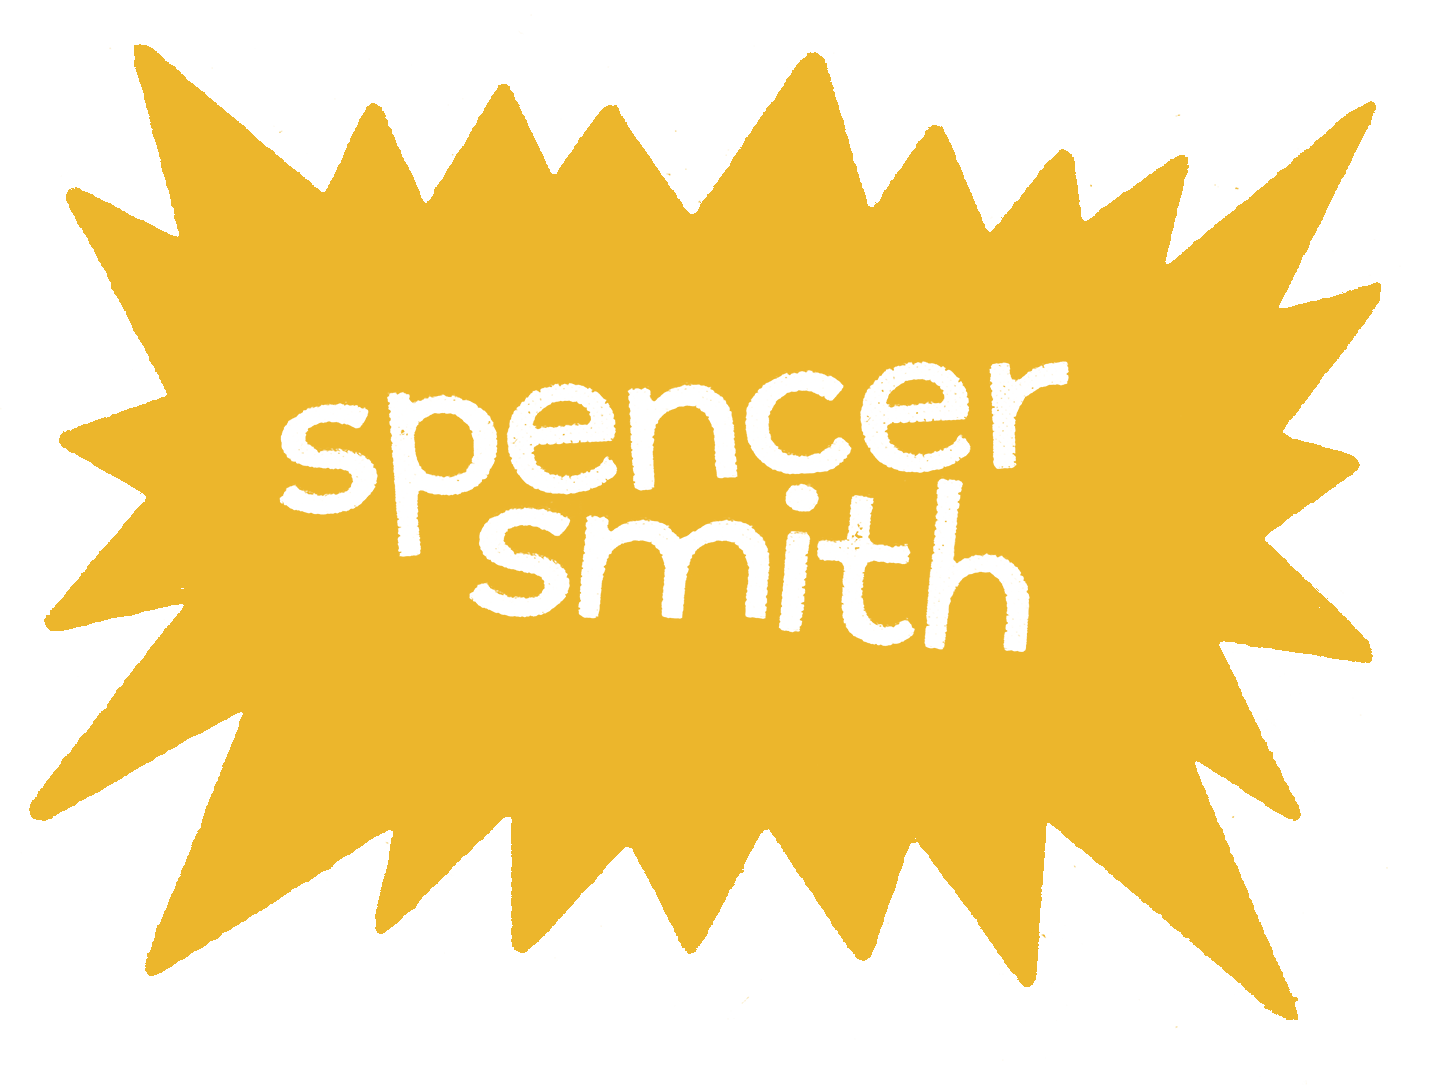 SPENCER SMITH